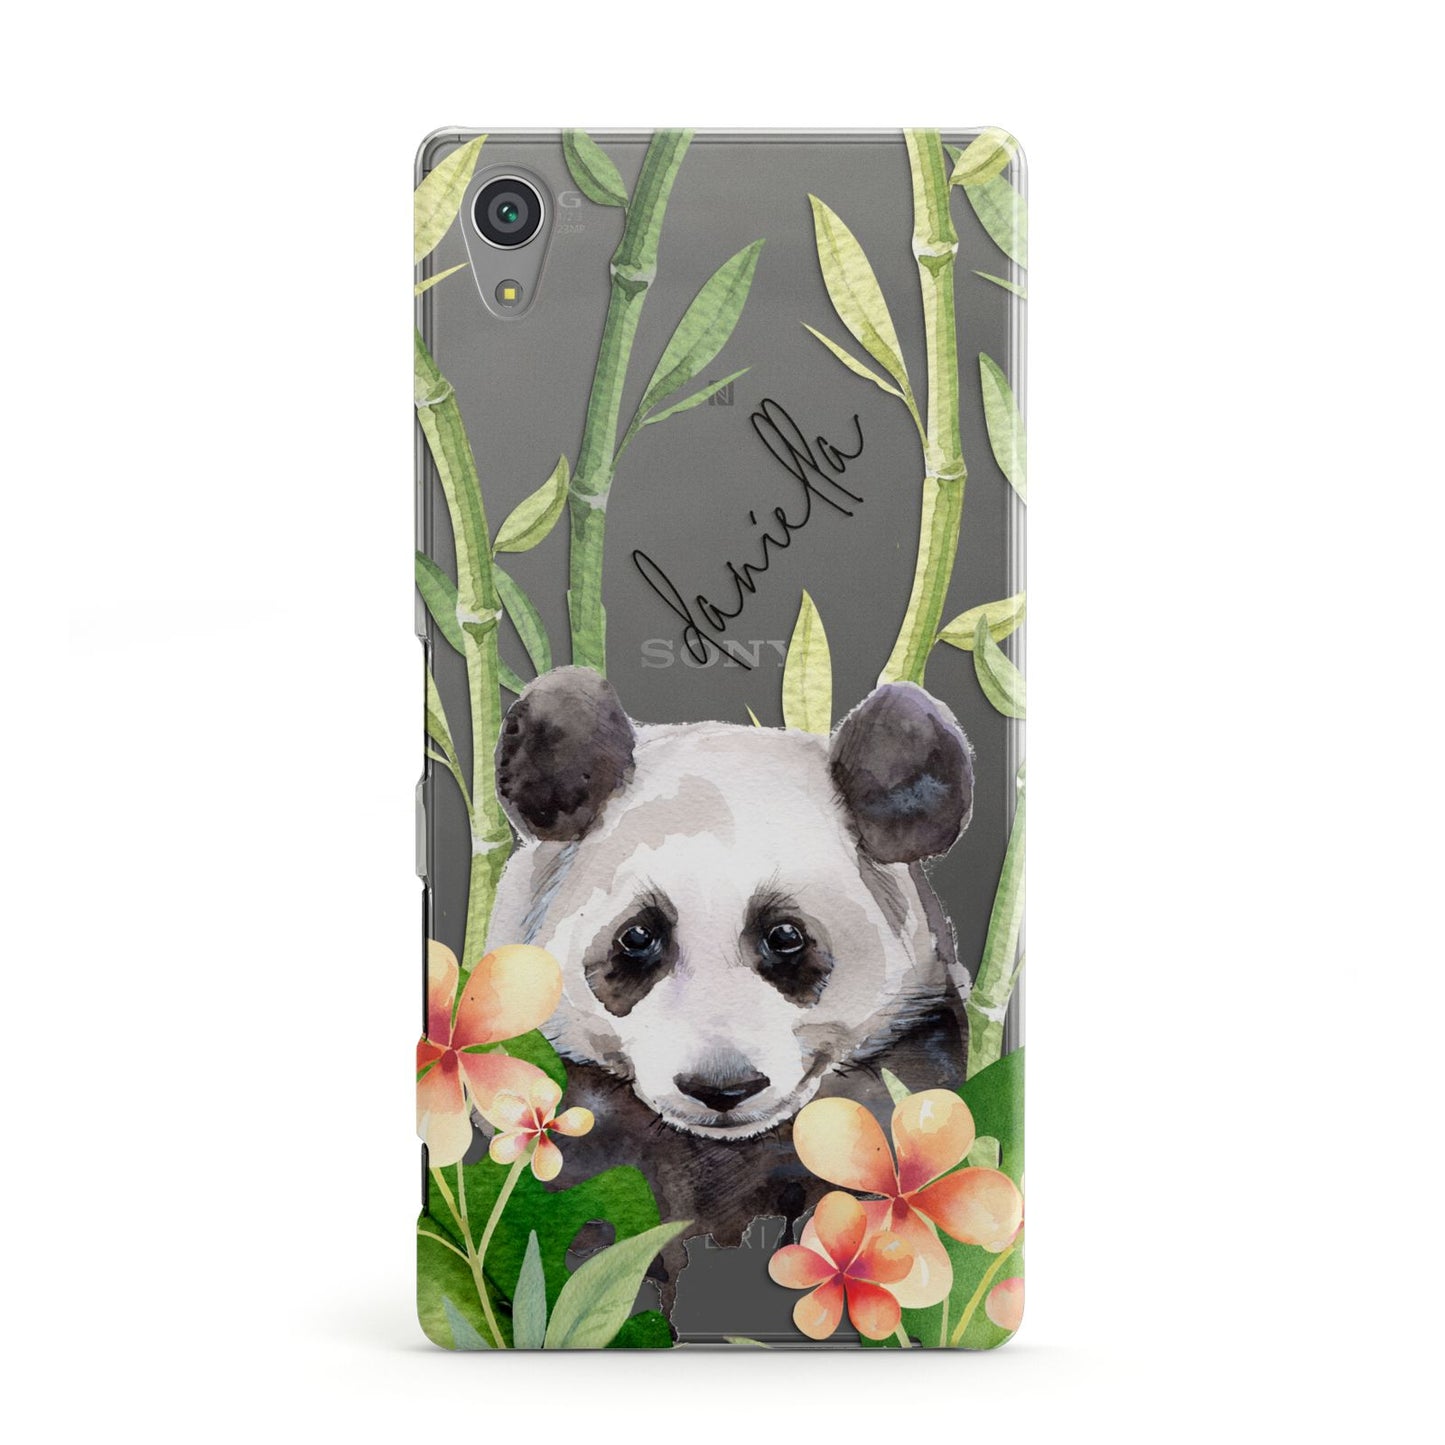 Personalised Panda Sony Xperia Case